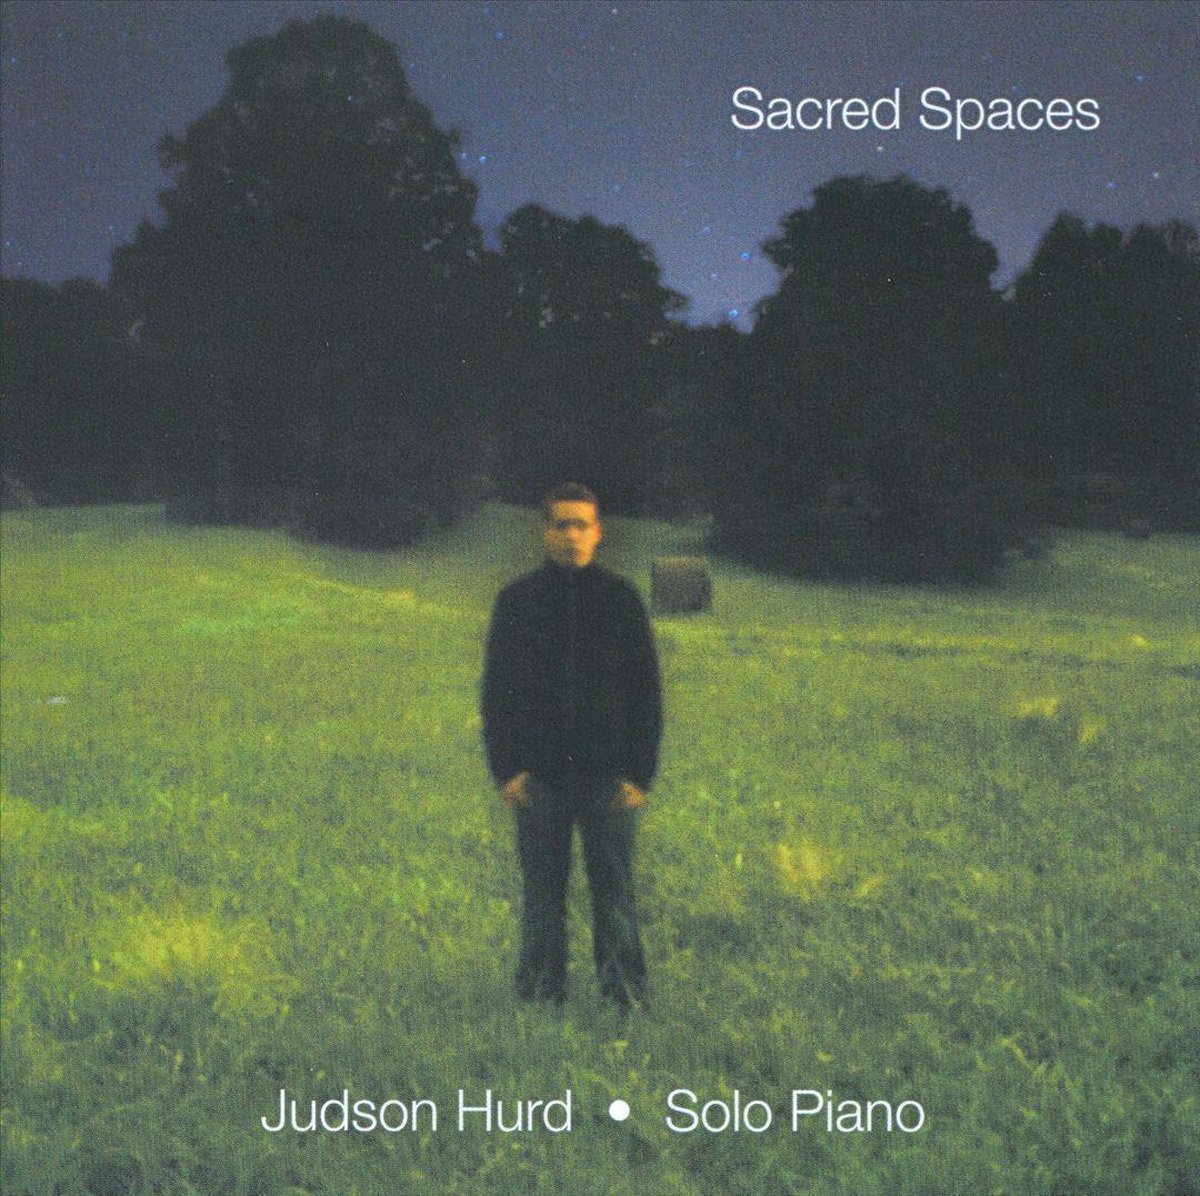 Sacred Spaces - Judson Hurd